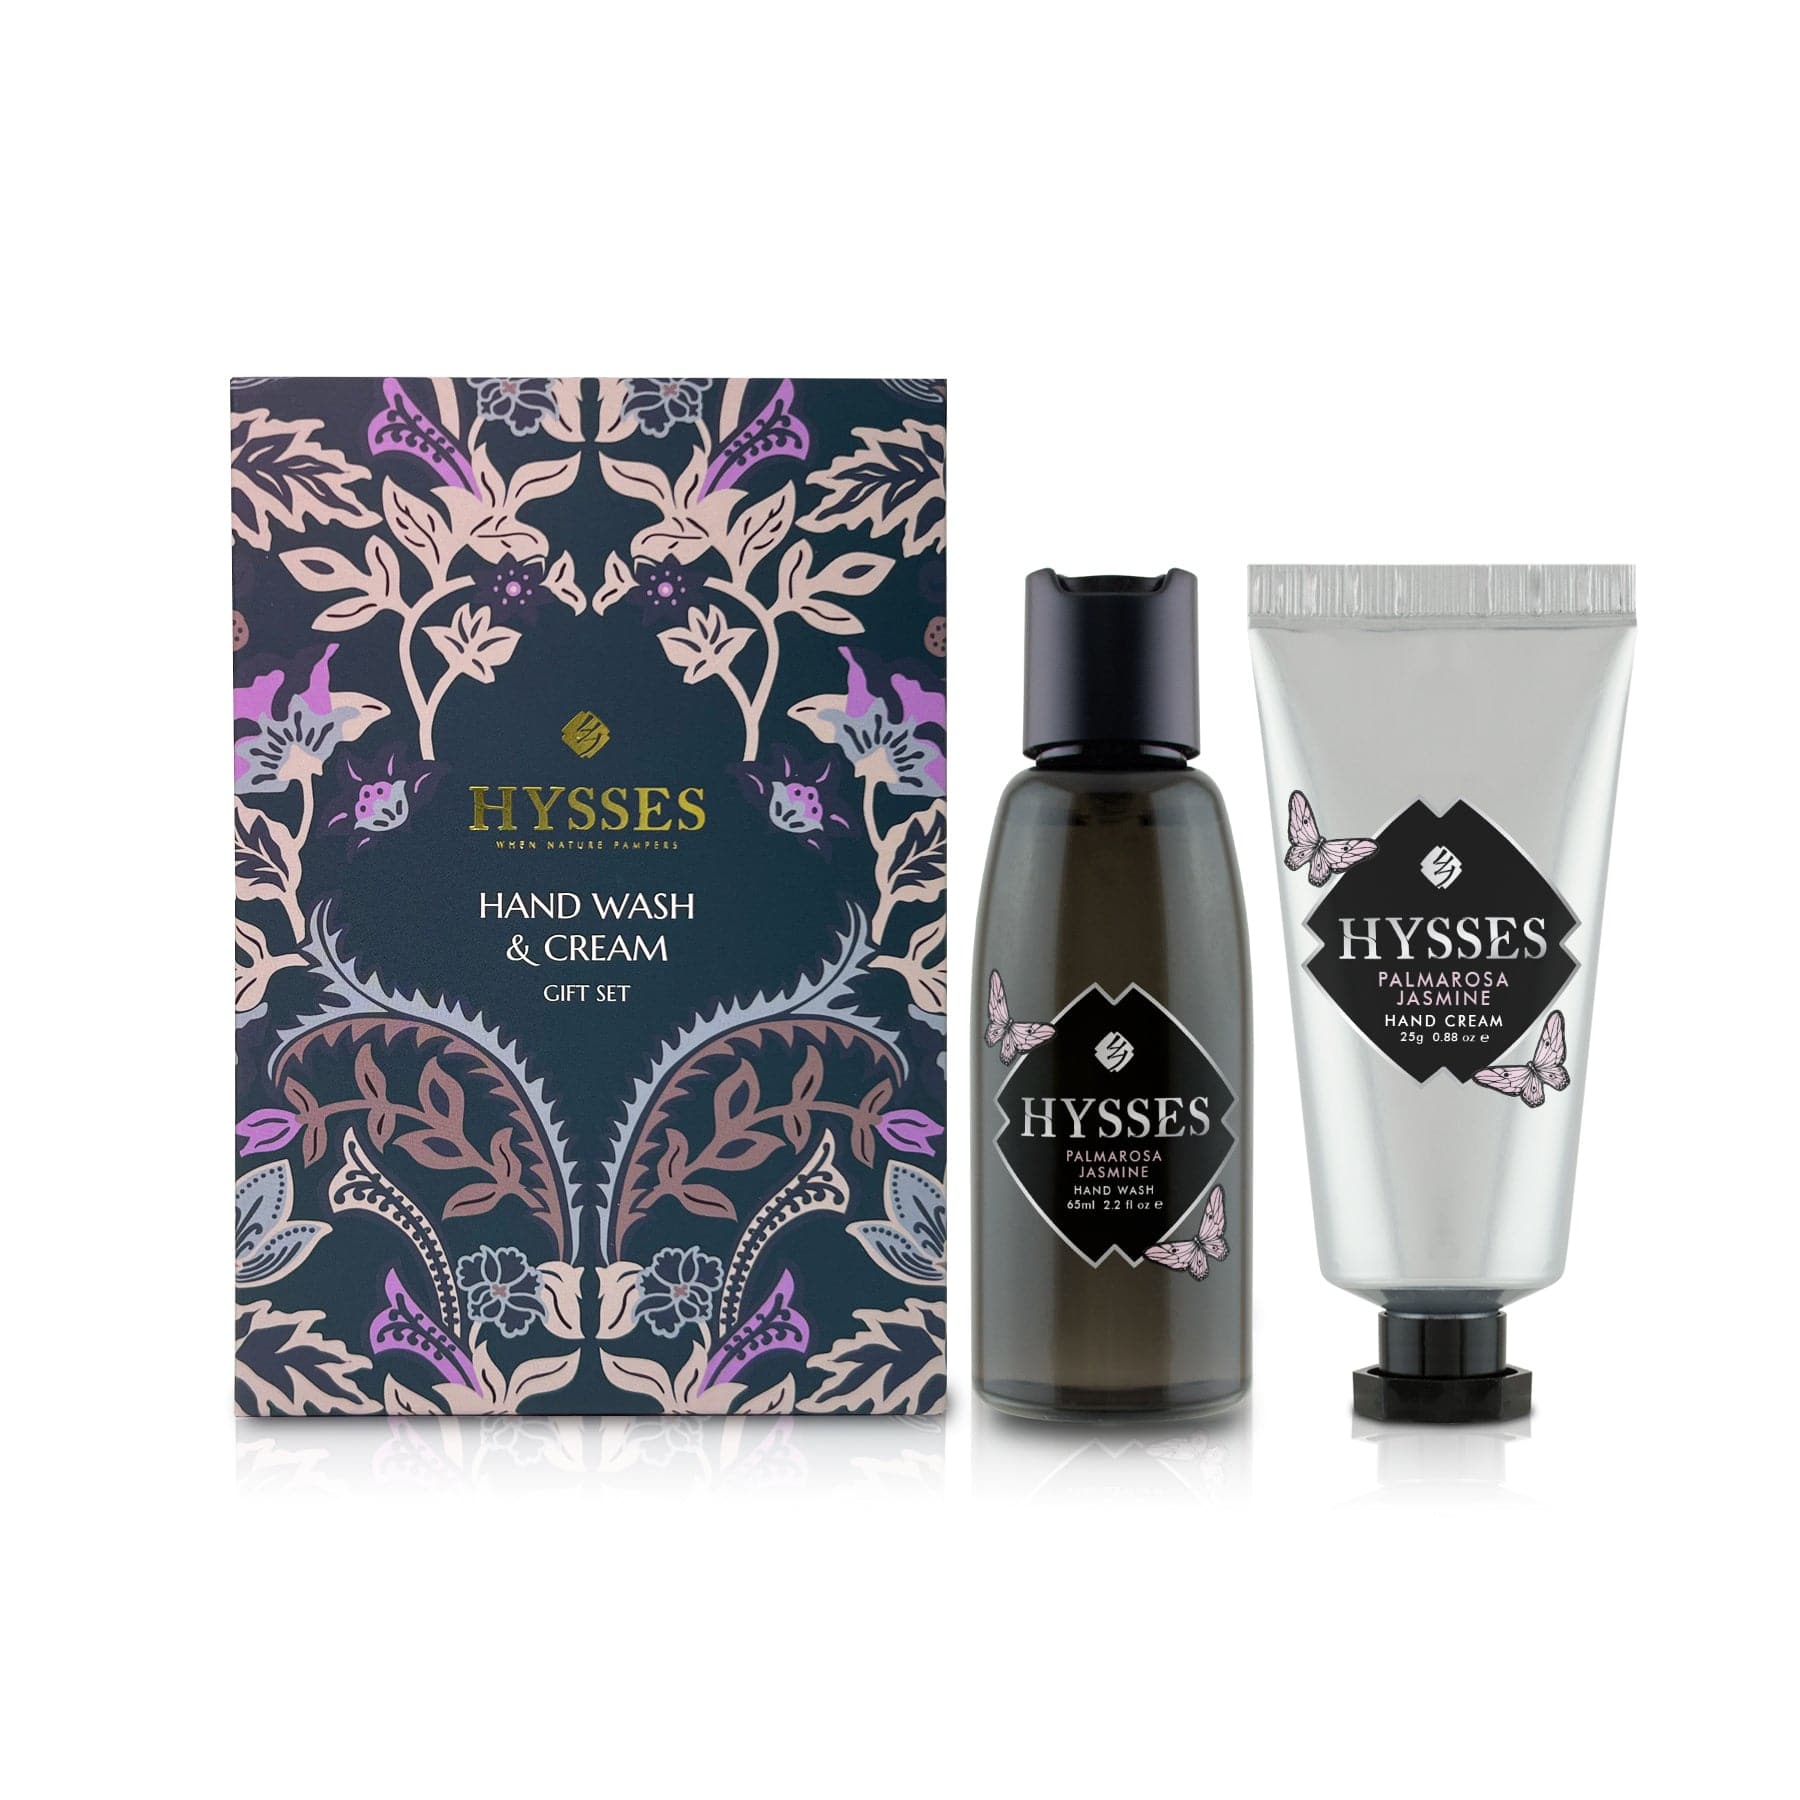 Hysses Body Care Palmarosa Jasmine Travel Gift Set (Hand Wash & Hand Cream)